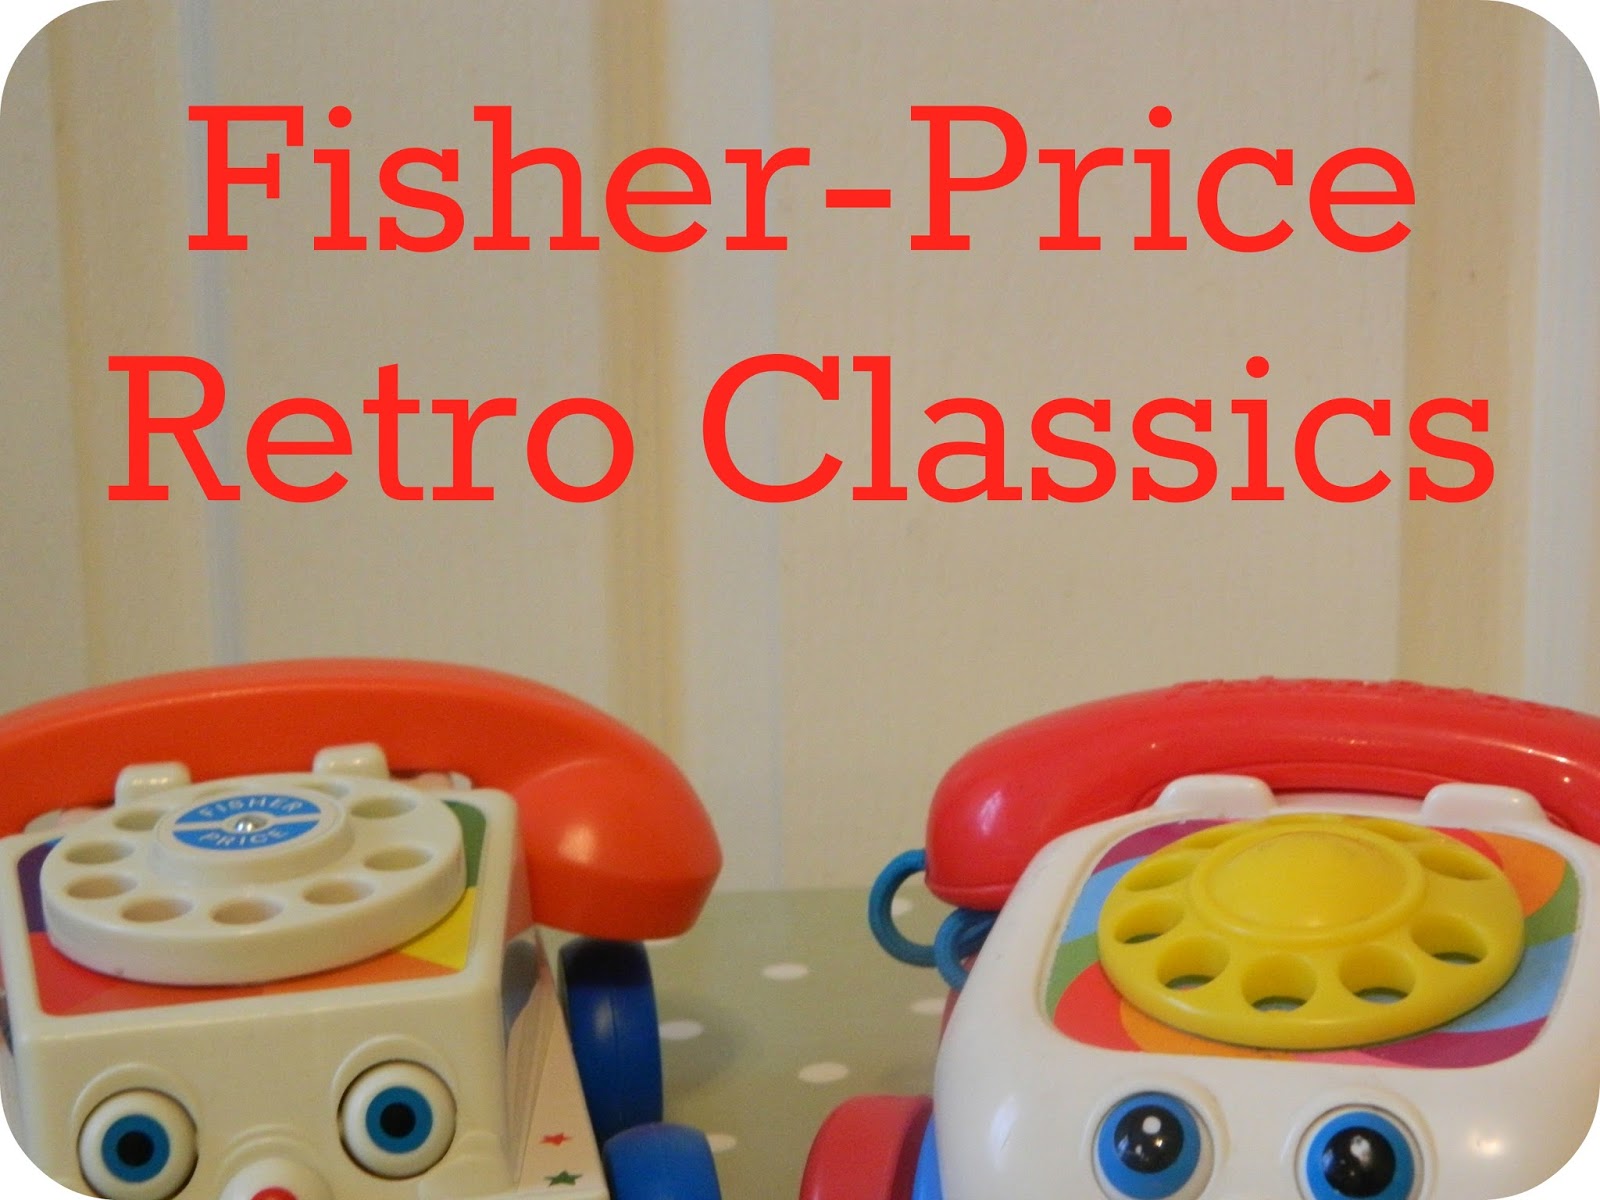 Fisher-Price Retro Classics